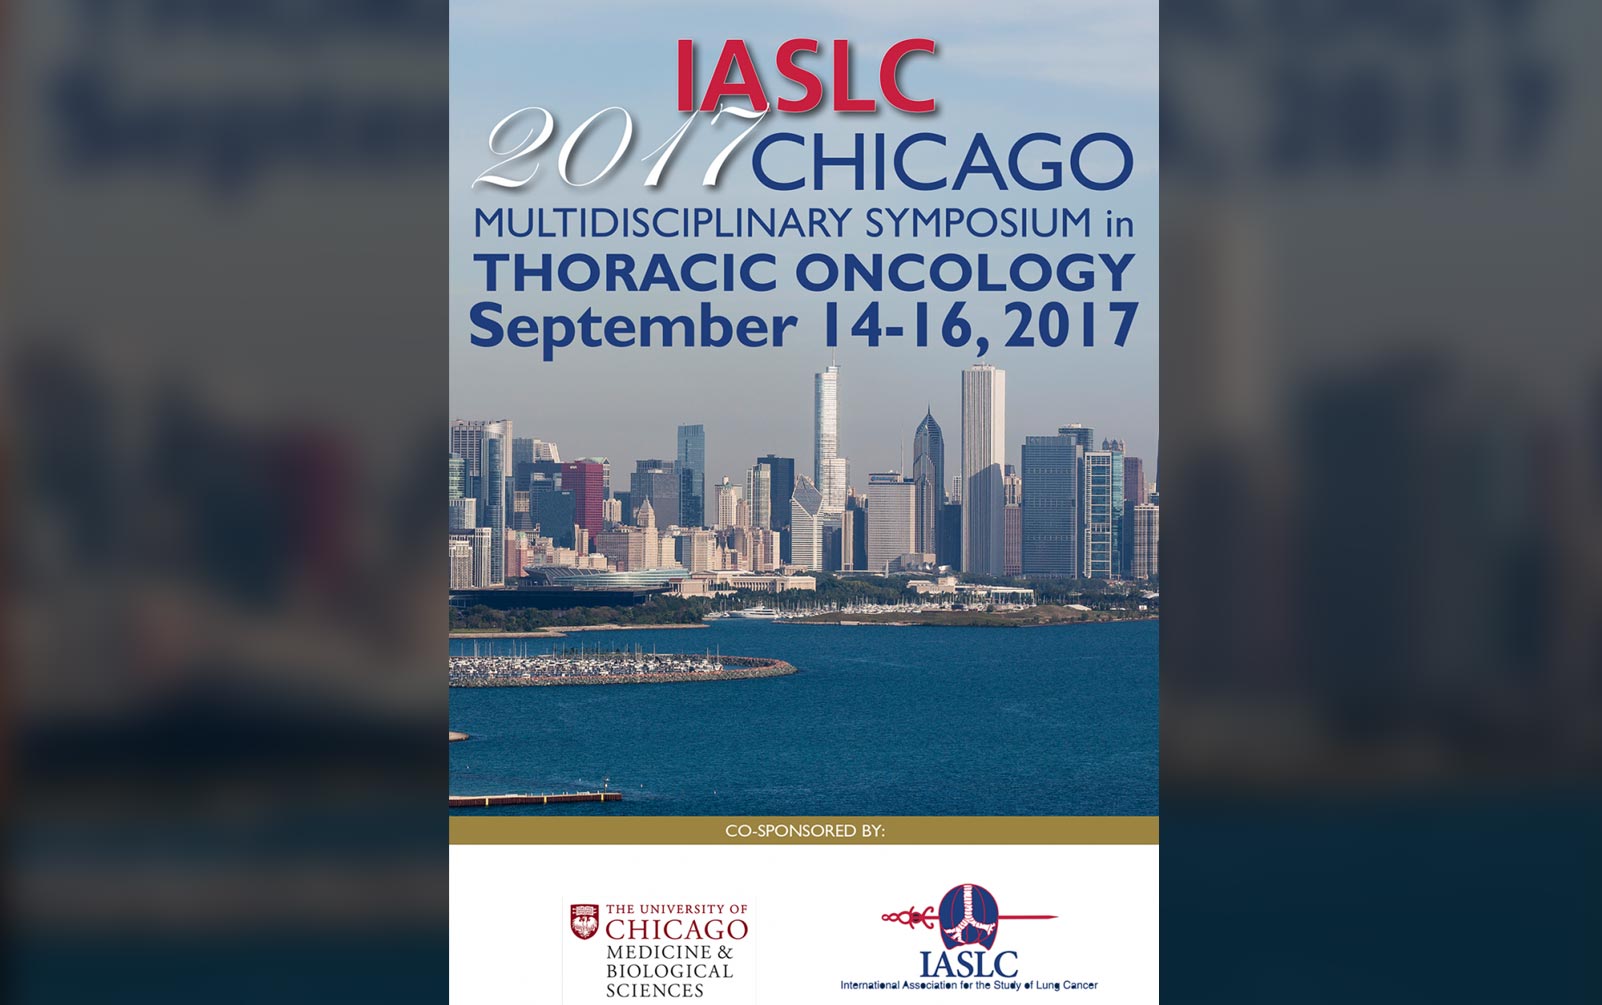 IASLC 2017 Chicago Multidisciplinary Symposium in Thoracic Oncology